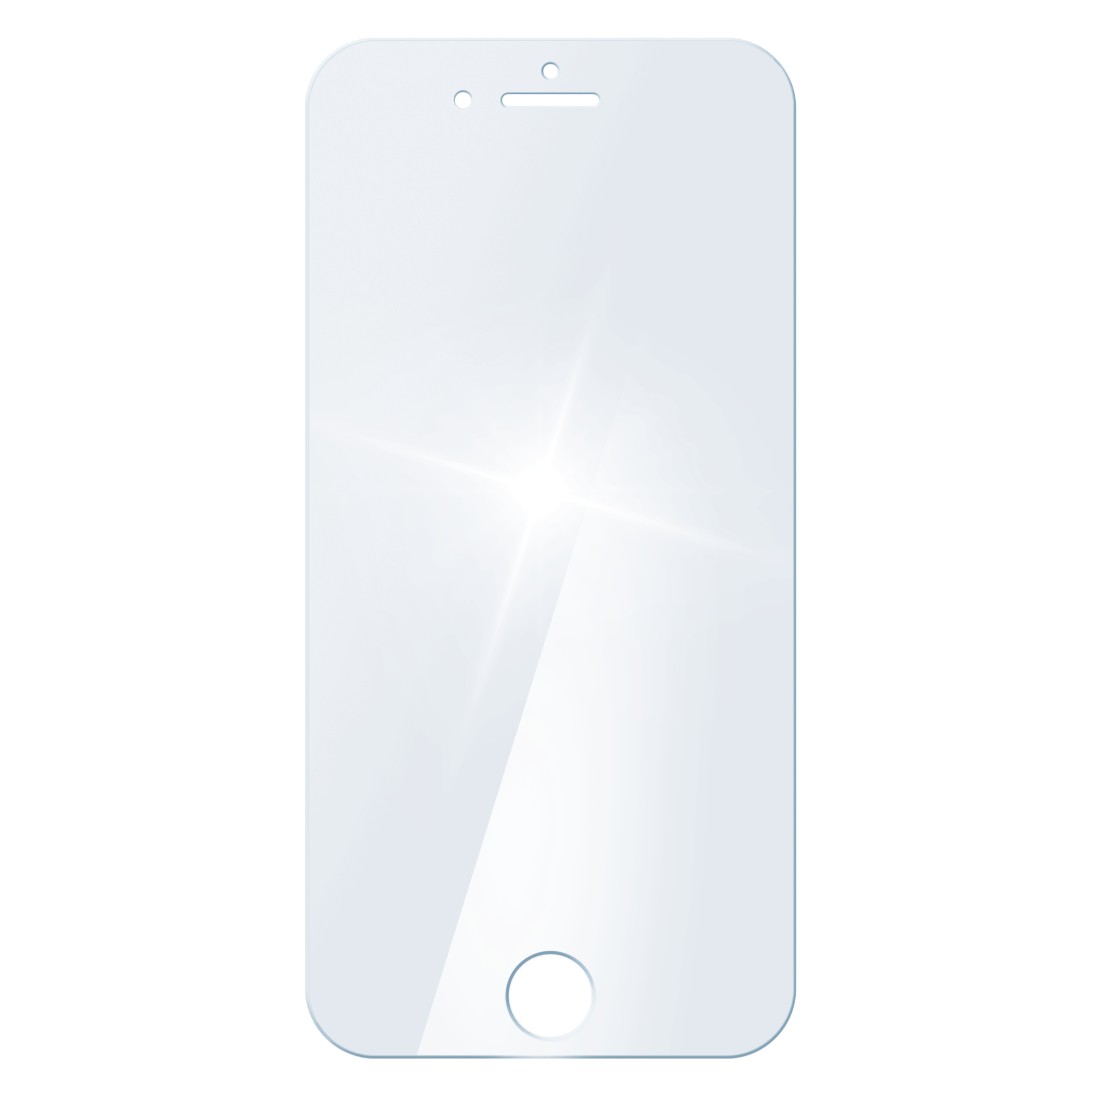 Hama Premium Crystal Real Glass Display Protector - Apple iPhone 6 Plus, 6s Plus, 7 Plus, 8 Plus